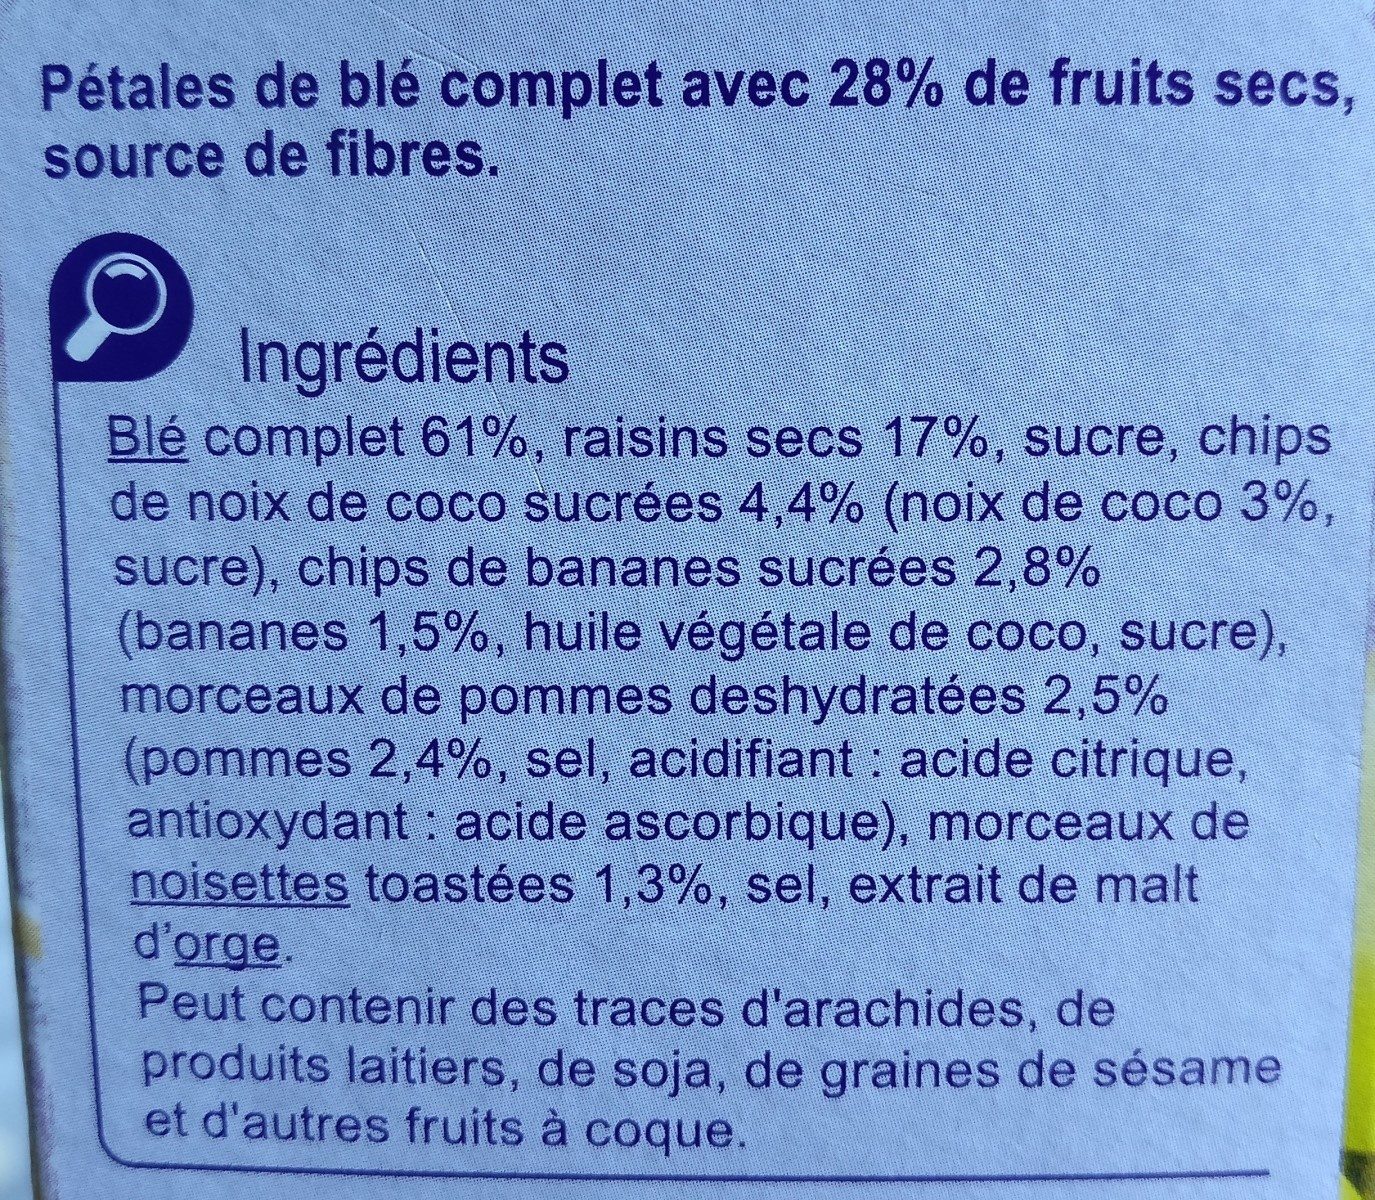 Fibra 5 fruits secs - Ingredientes - fr